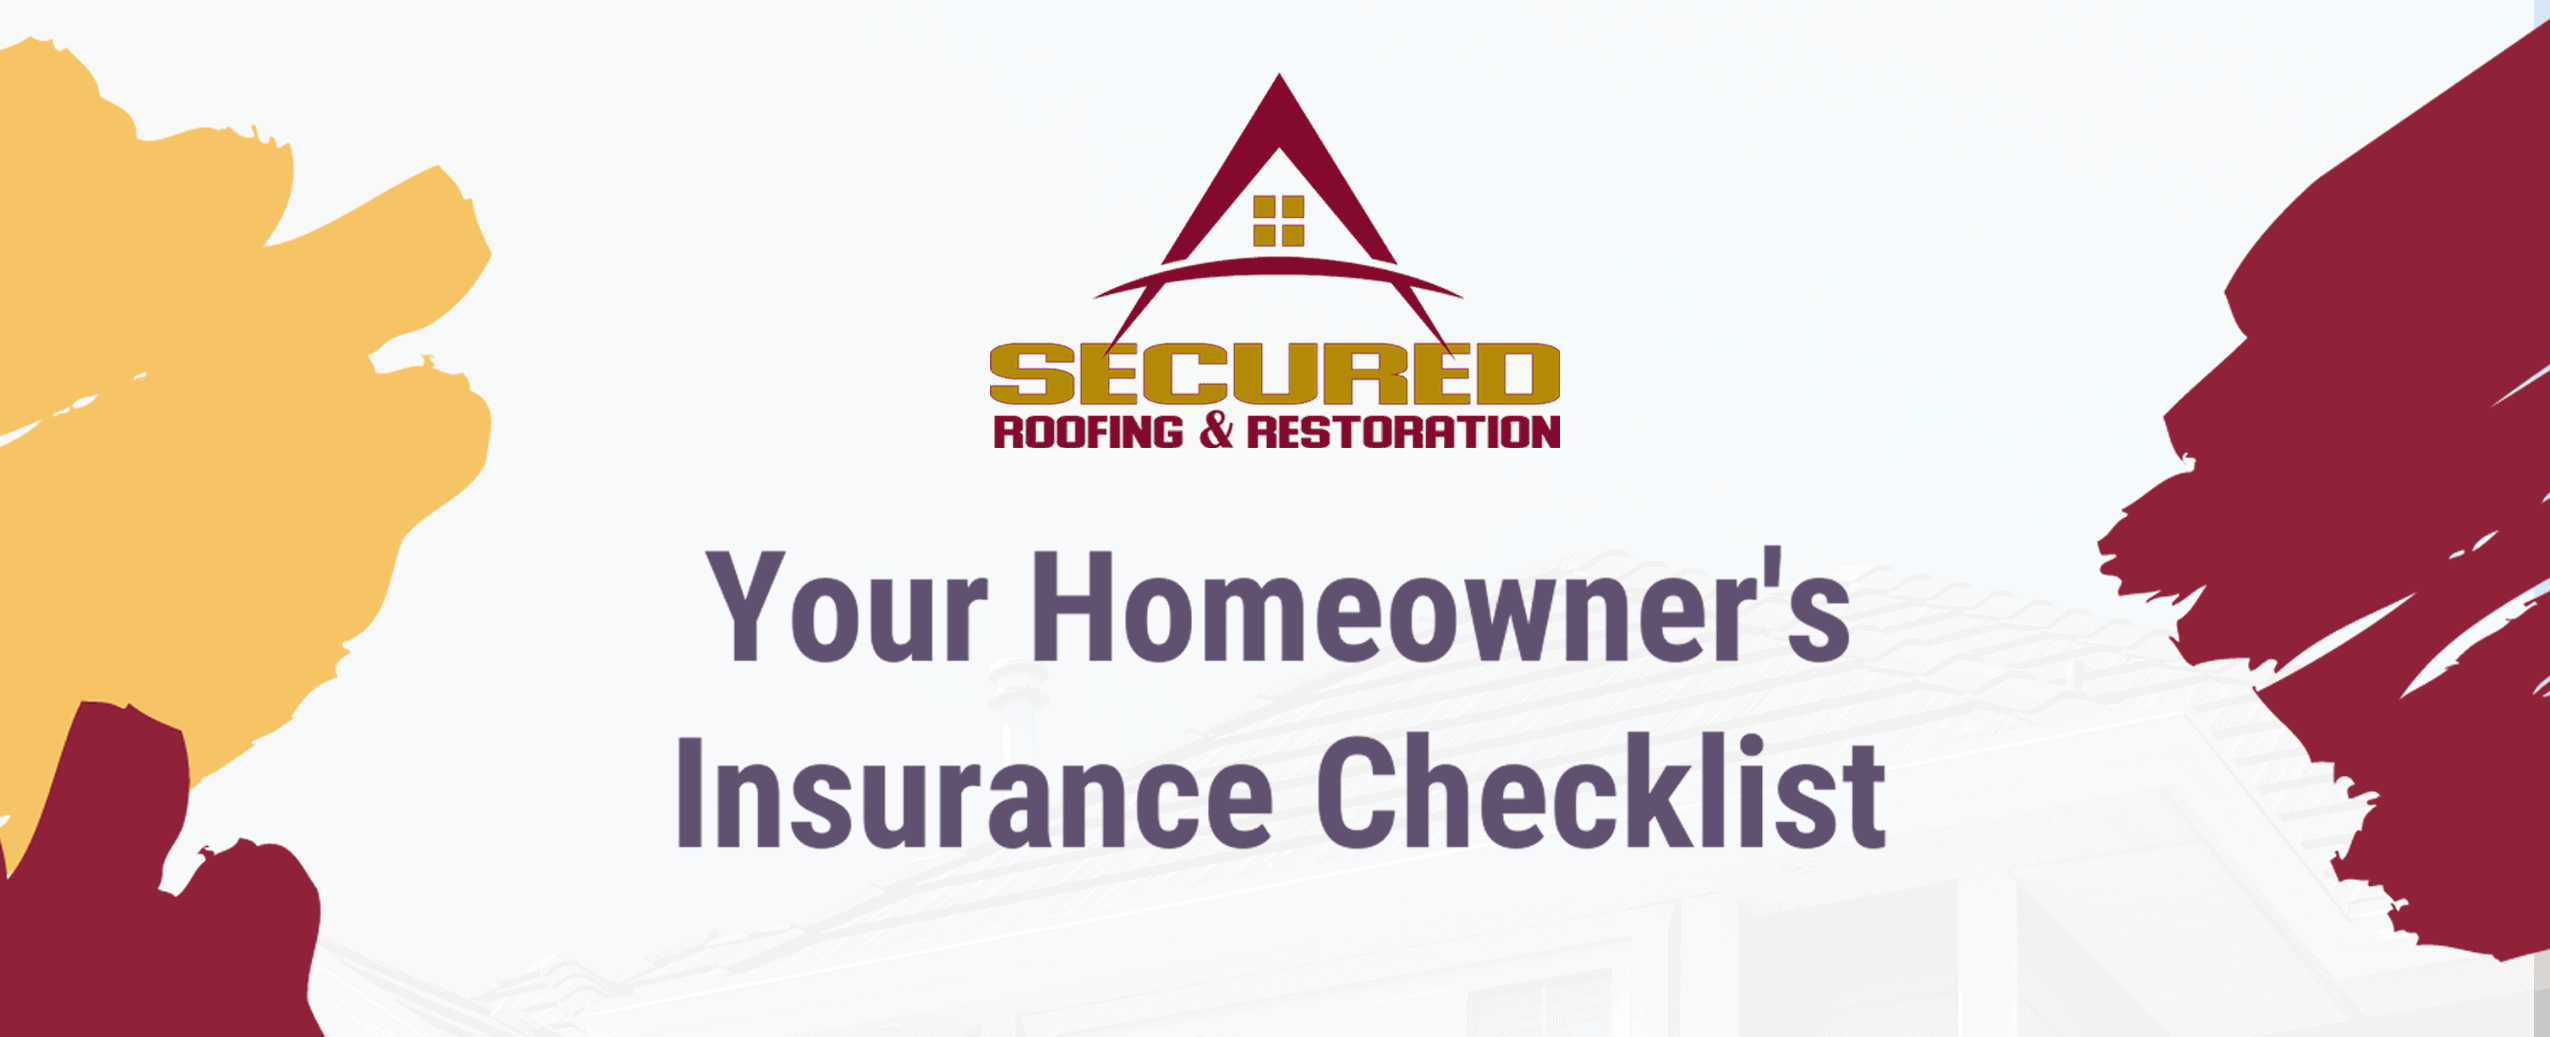 homeowner's insurance checklist 